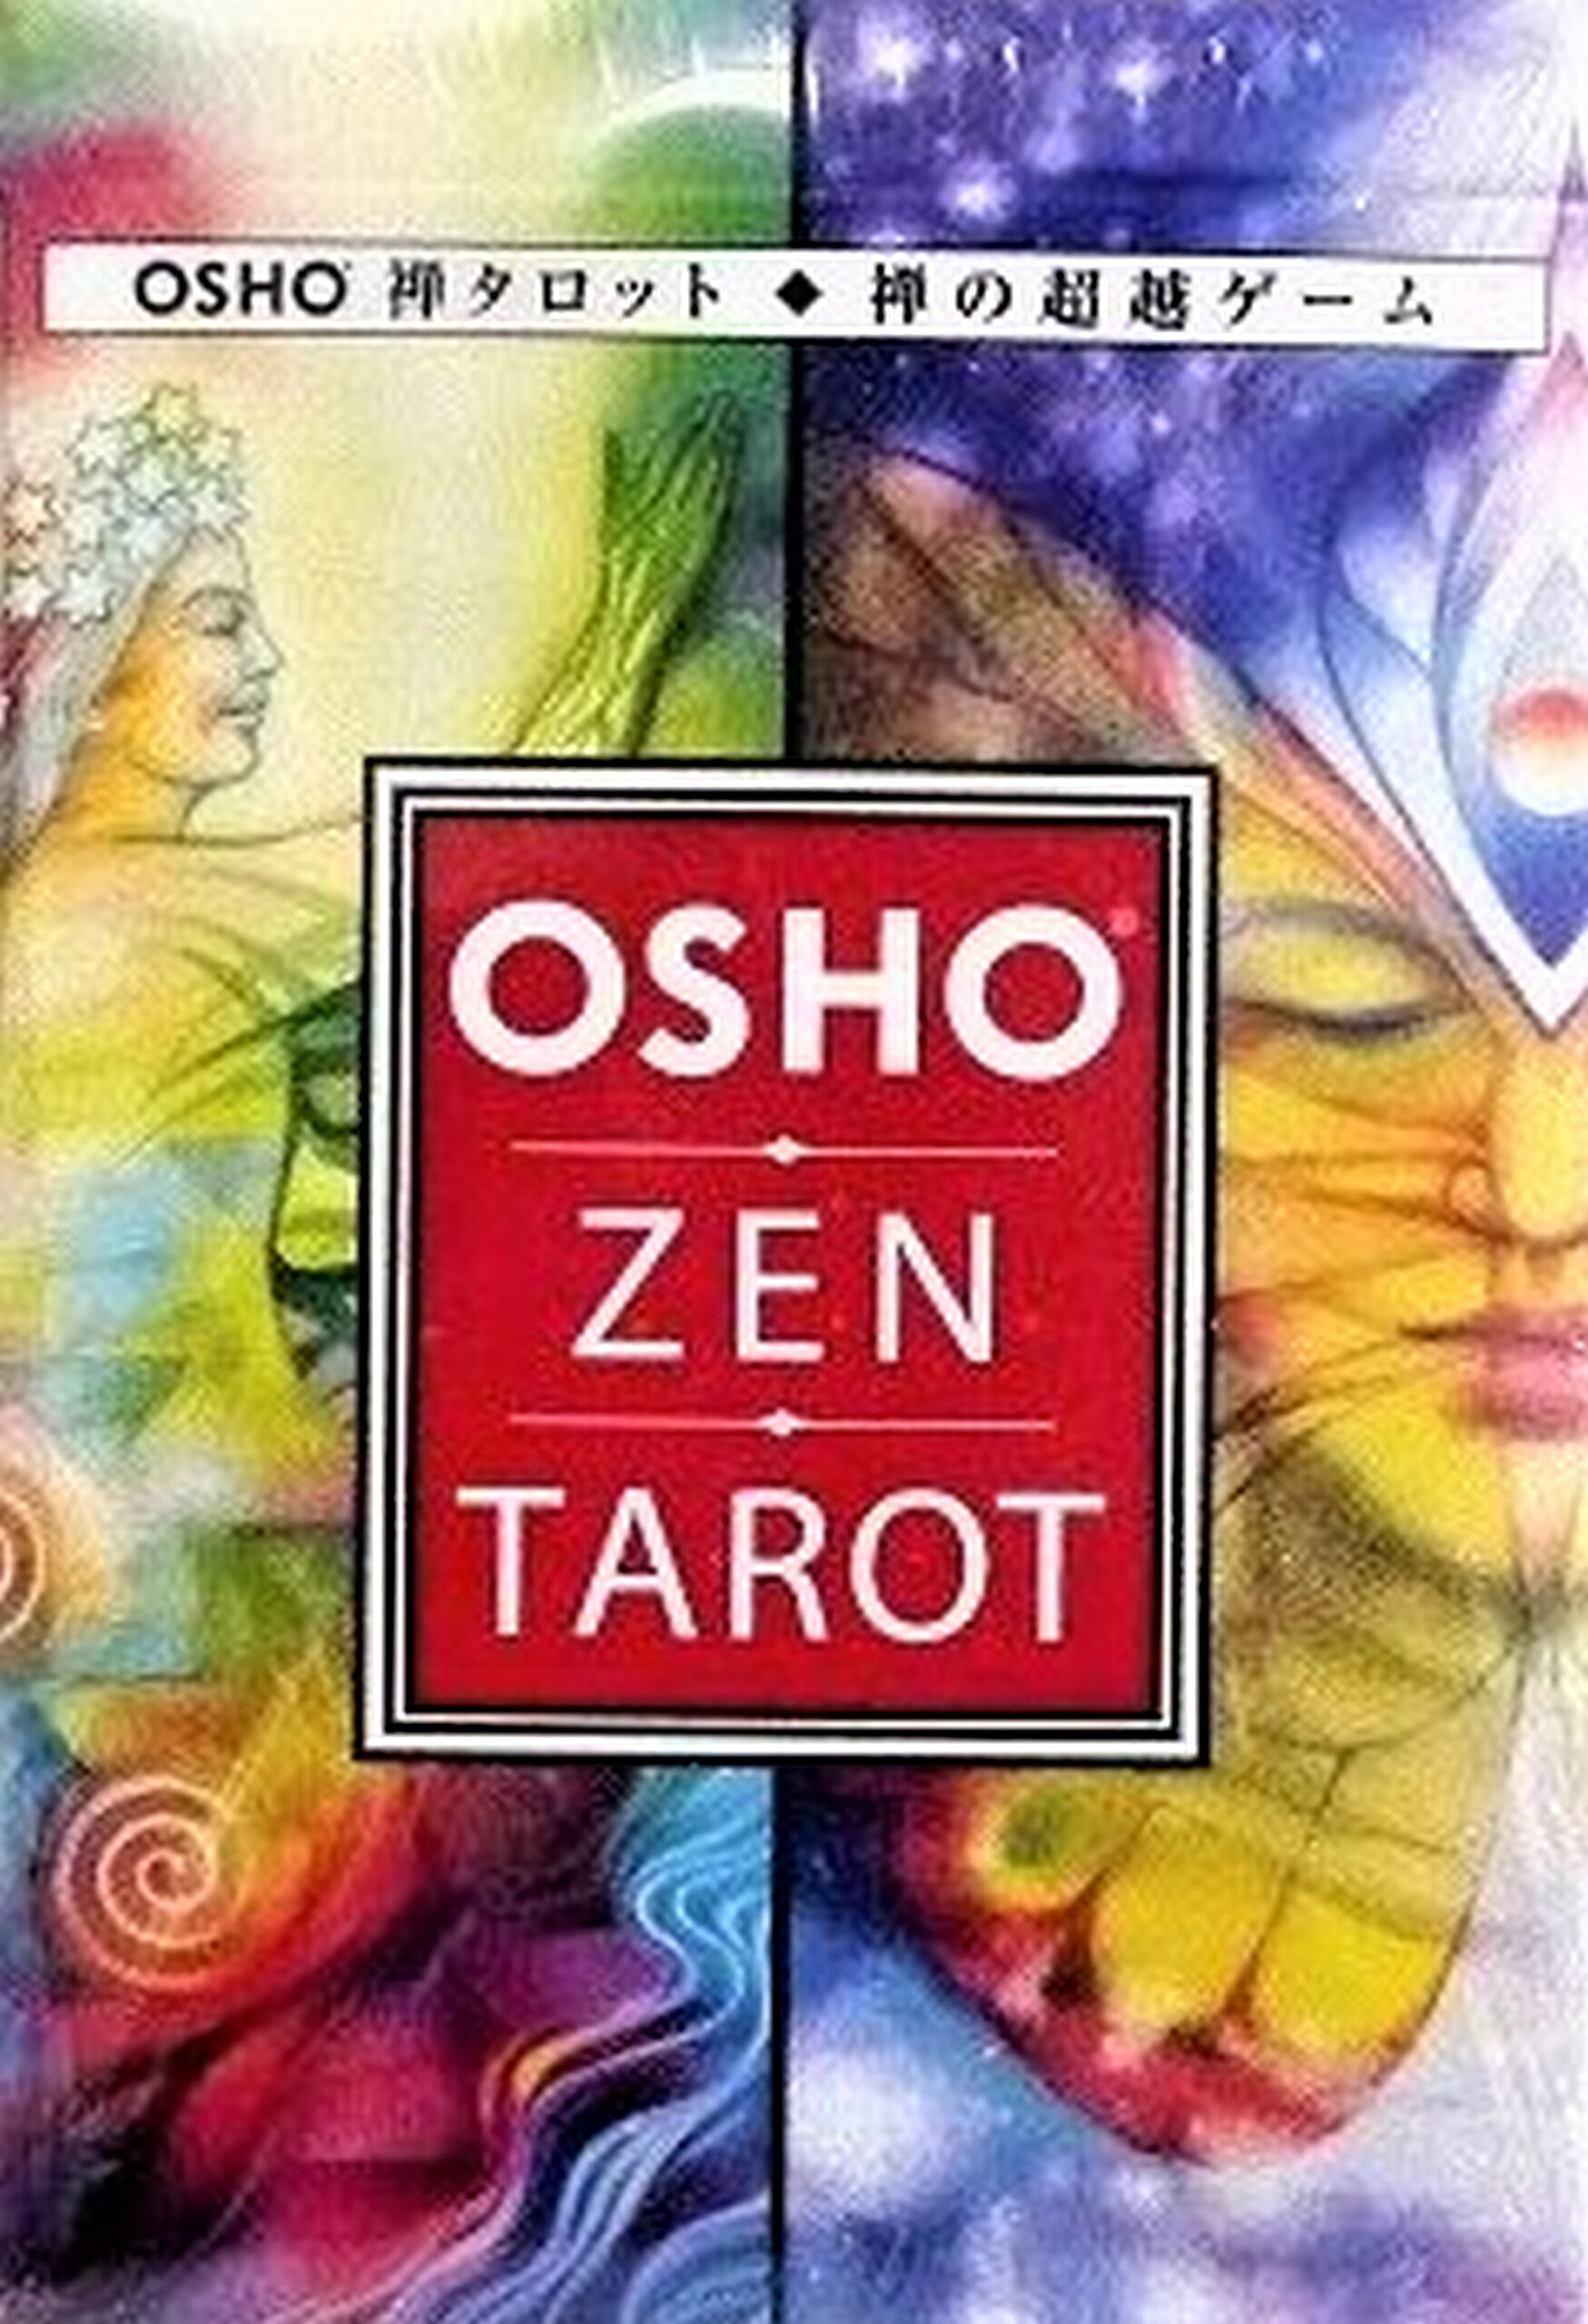 Titel Osho Zen Tarot – Japanese